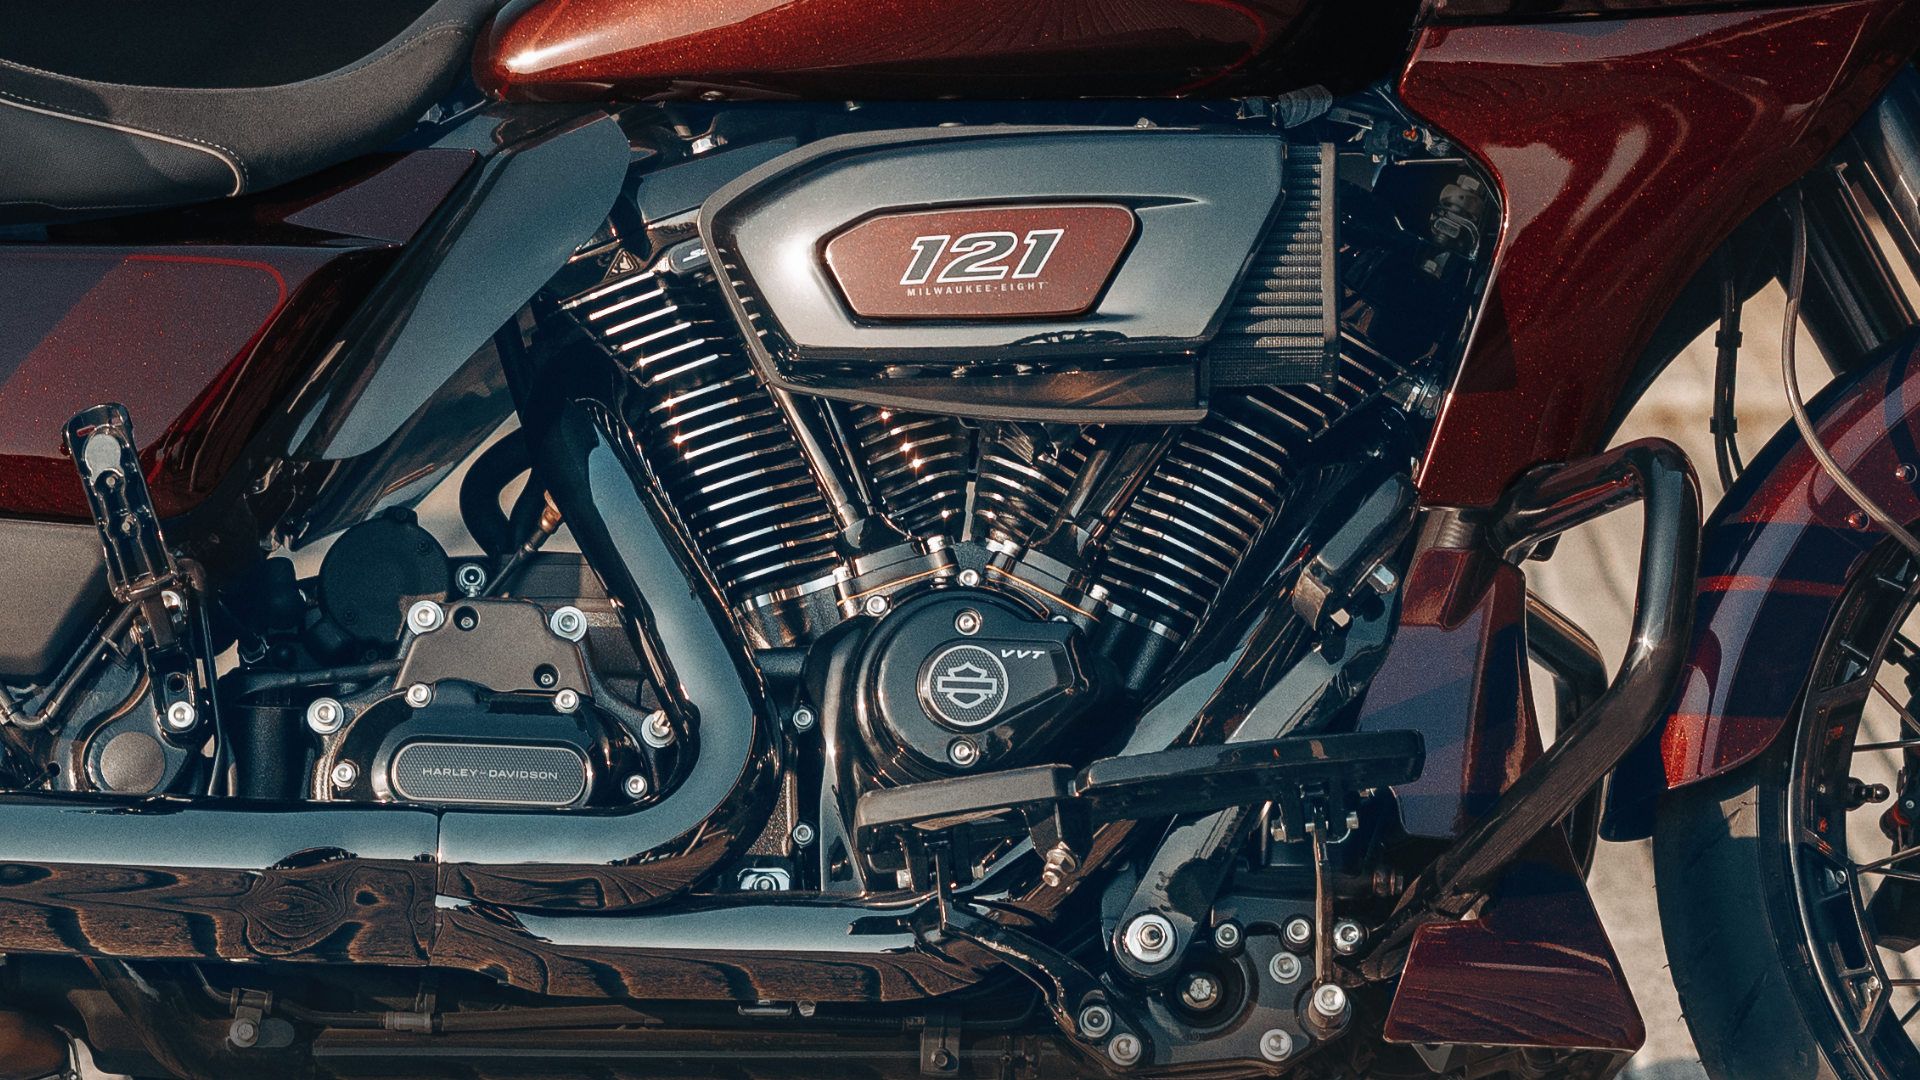 2024 Harley-Davidson CVO Road Glide engine close-up detail